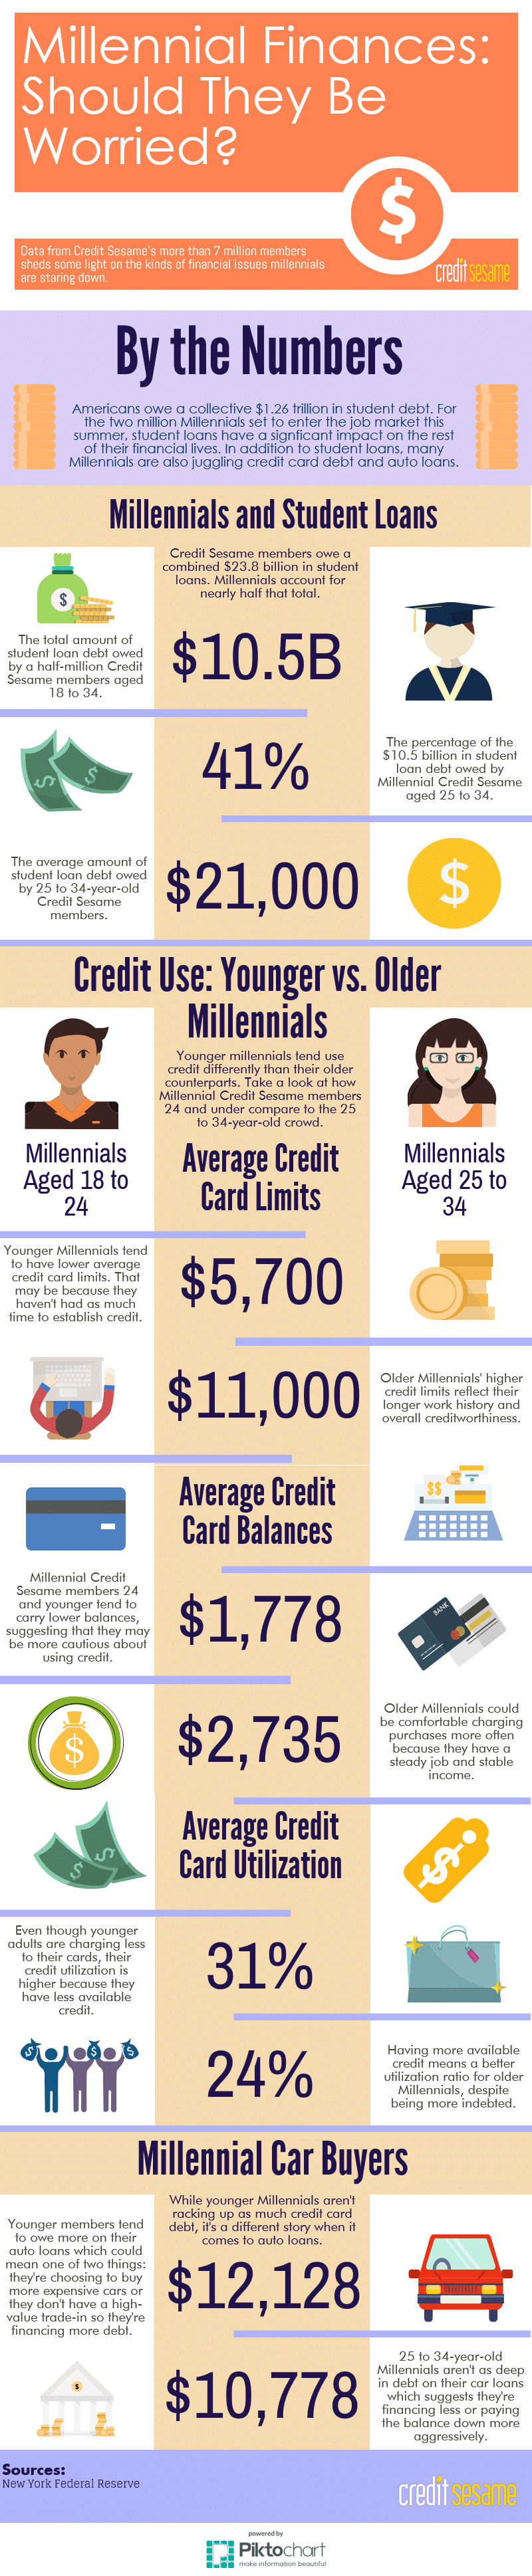 student-loans-and-millennials_(4)